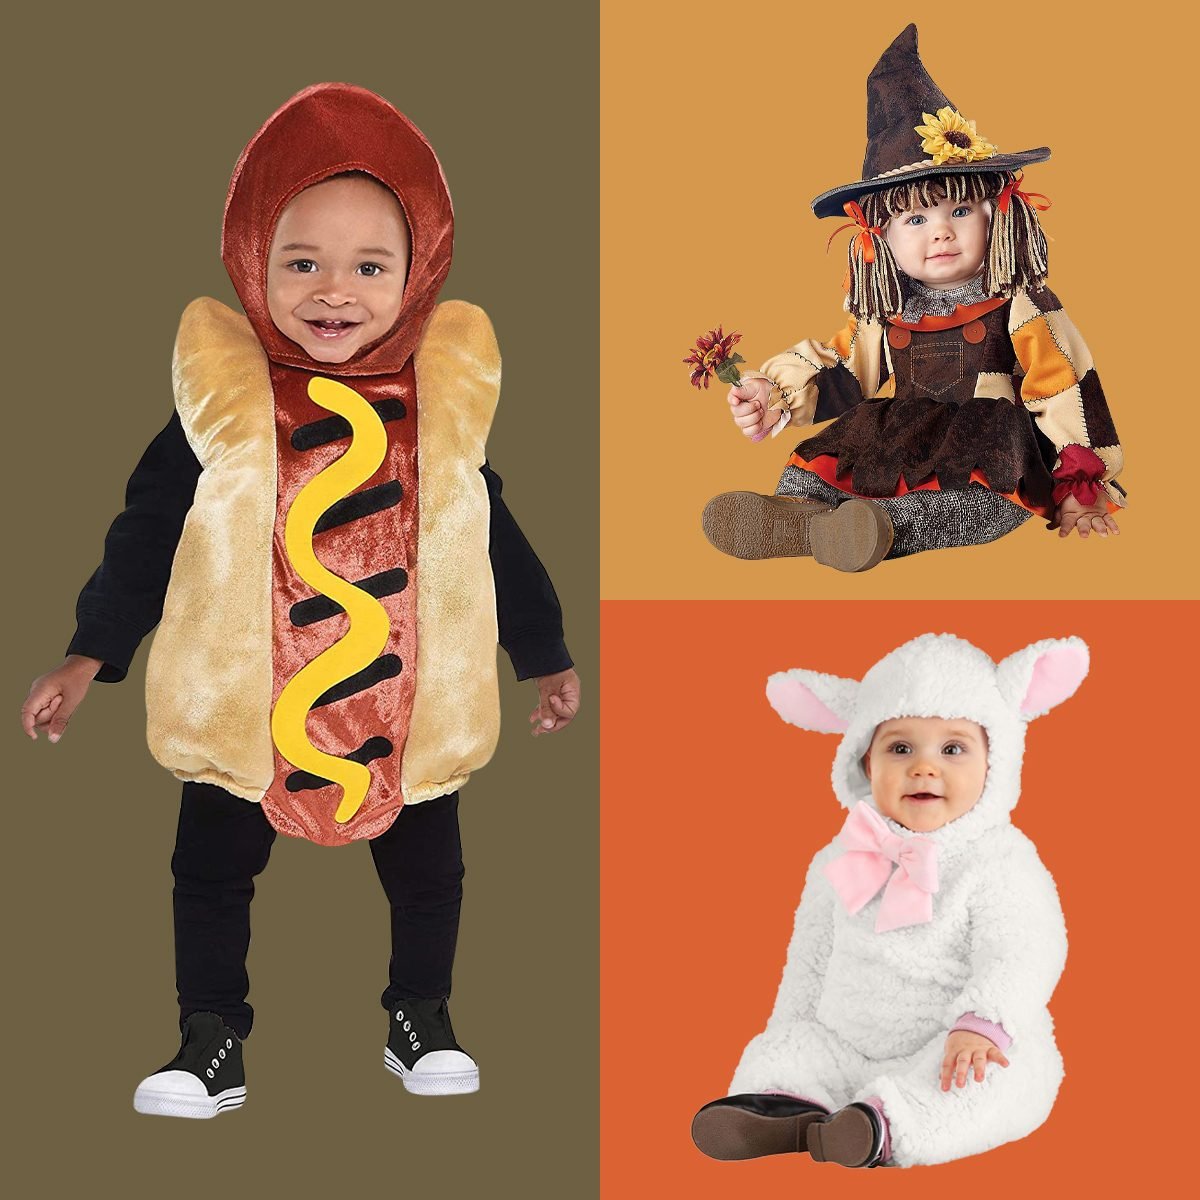 Baby Halloween Costume Ideas That Are Too Cute Via Merchant(3)